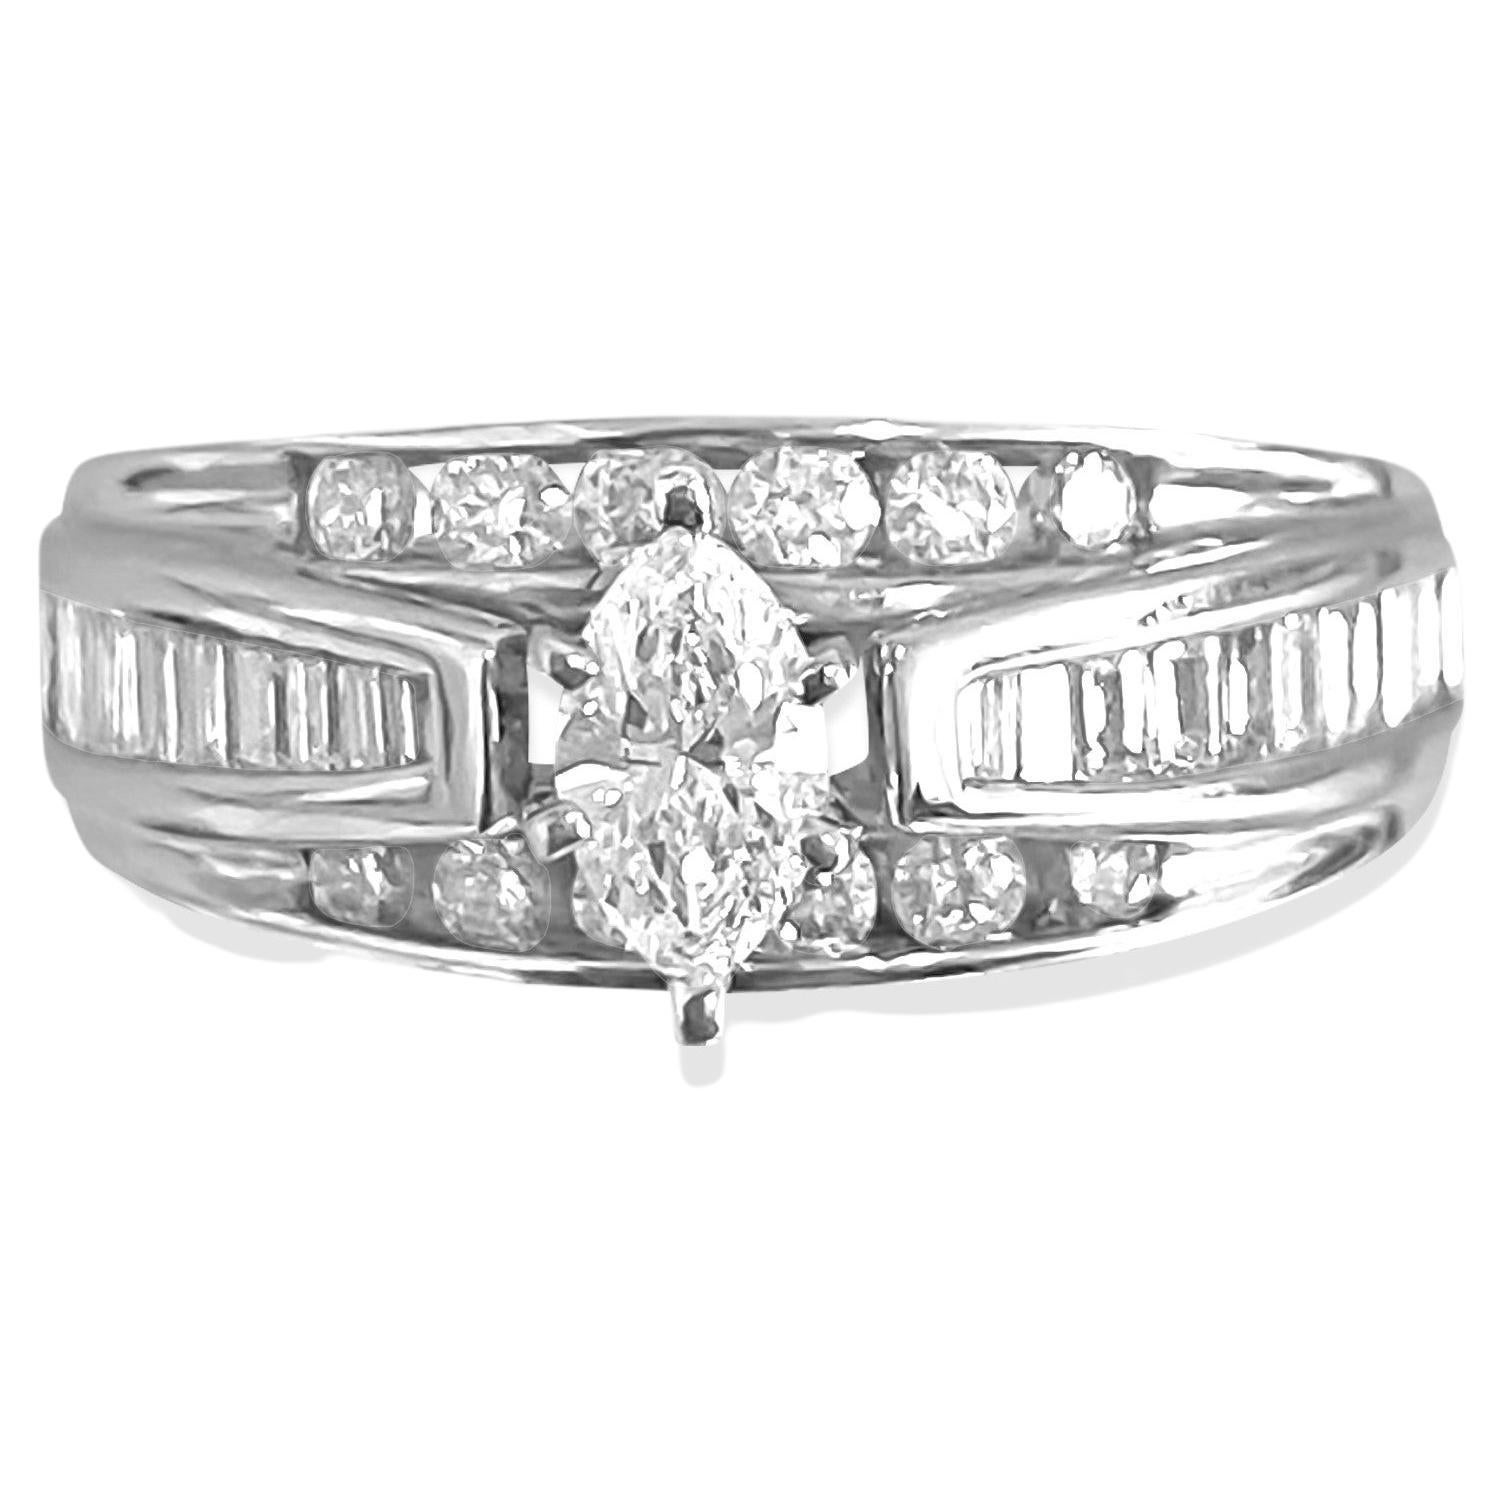 Vintage 2.40ct Diamond Gold Engagement Ring 14K Gold